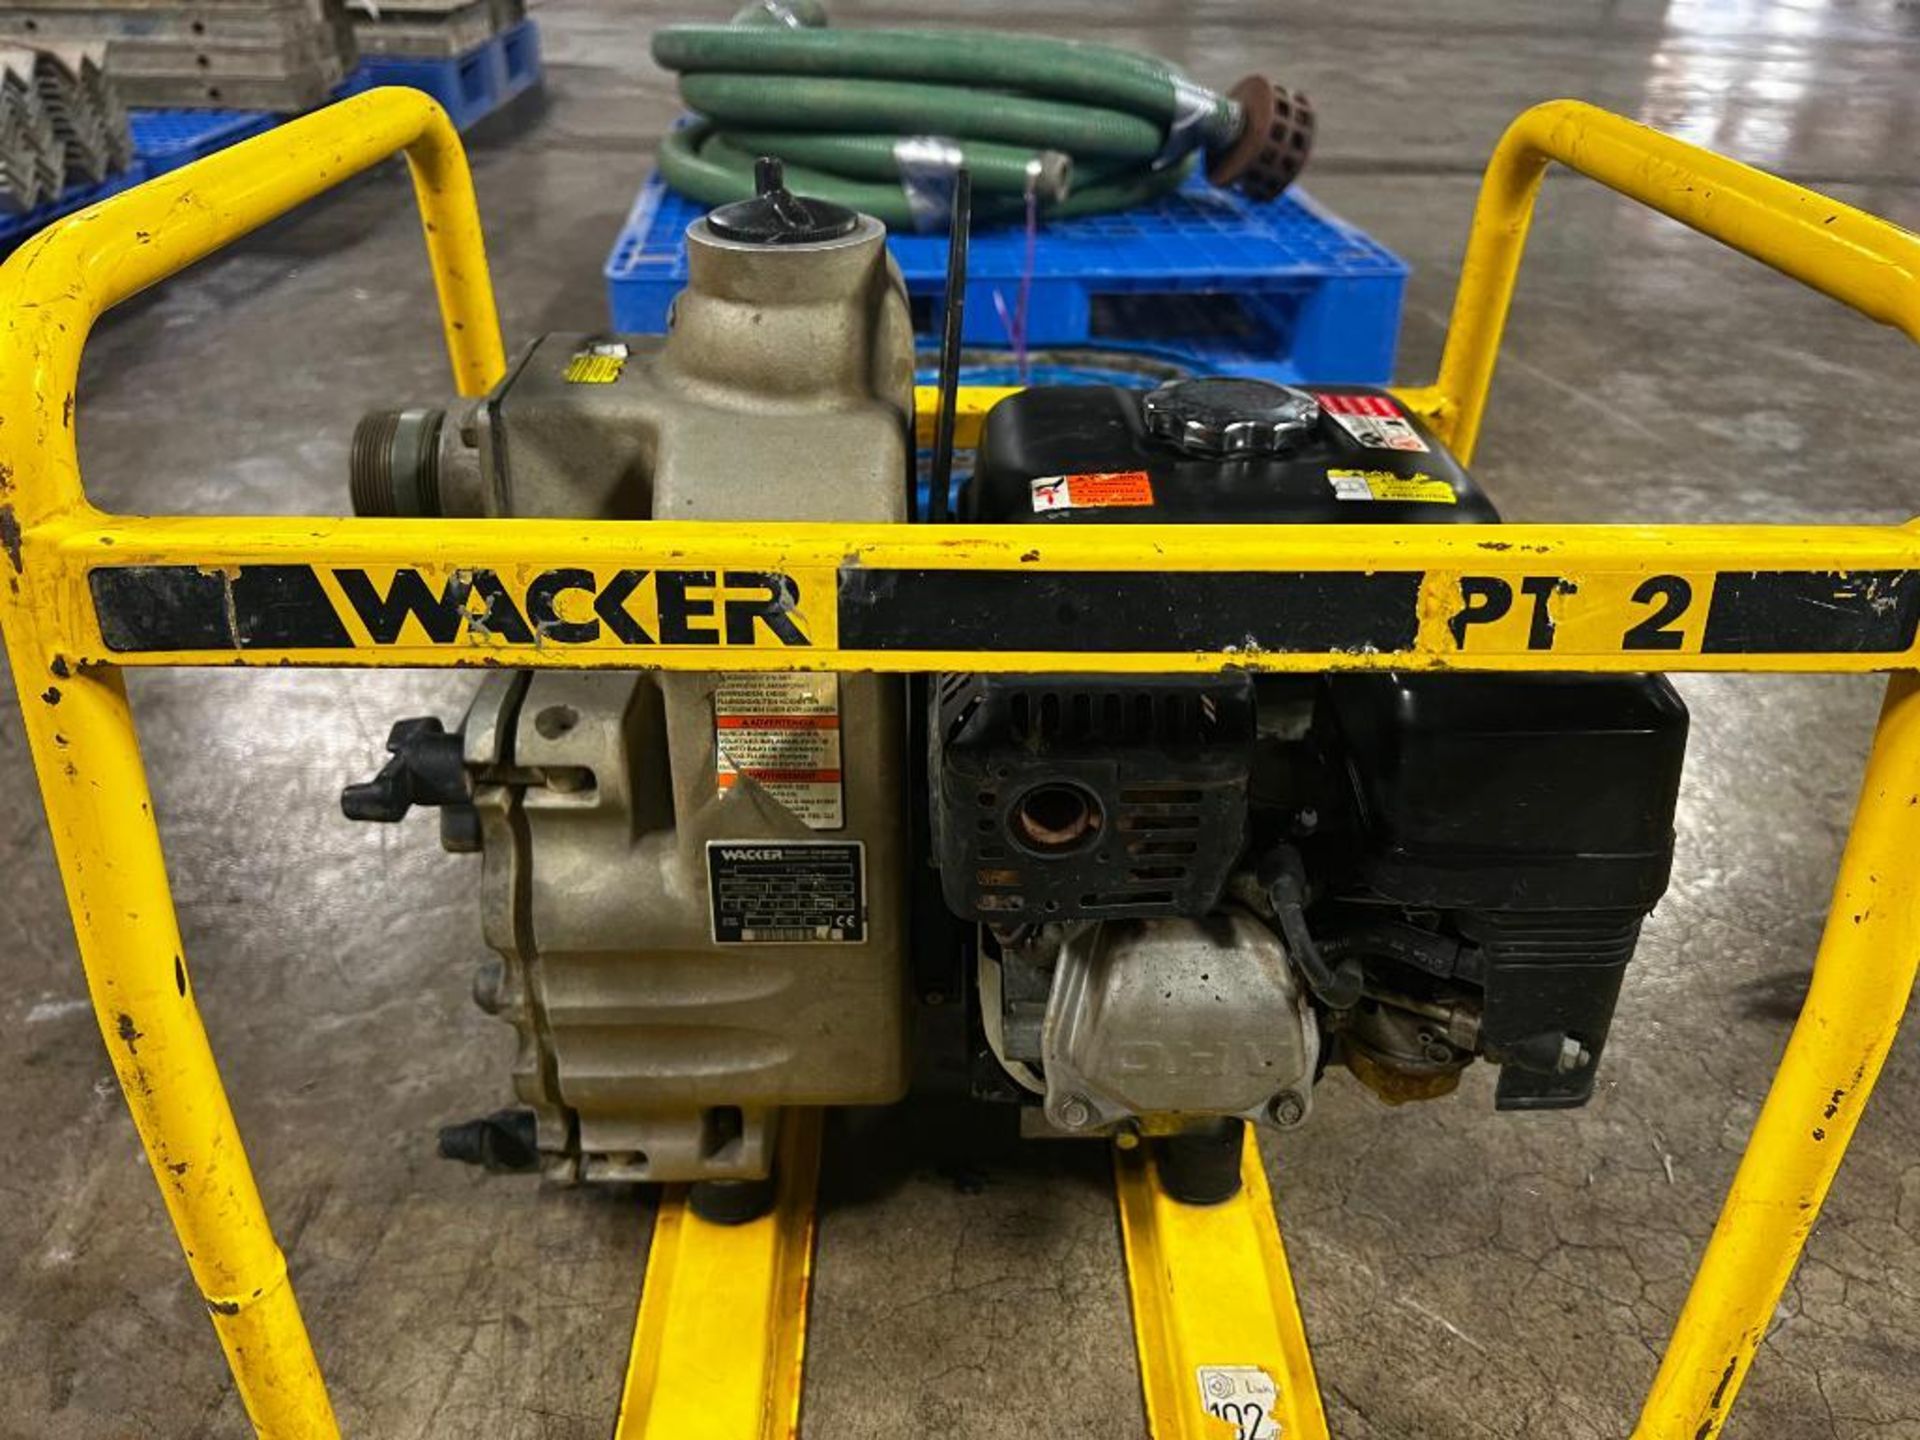 Wacker Self-priming Trash Pump, Model PT2A, Serial # 5576113, Honda GX160 5.5 engine, with hoses, - Image 2 of 6